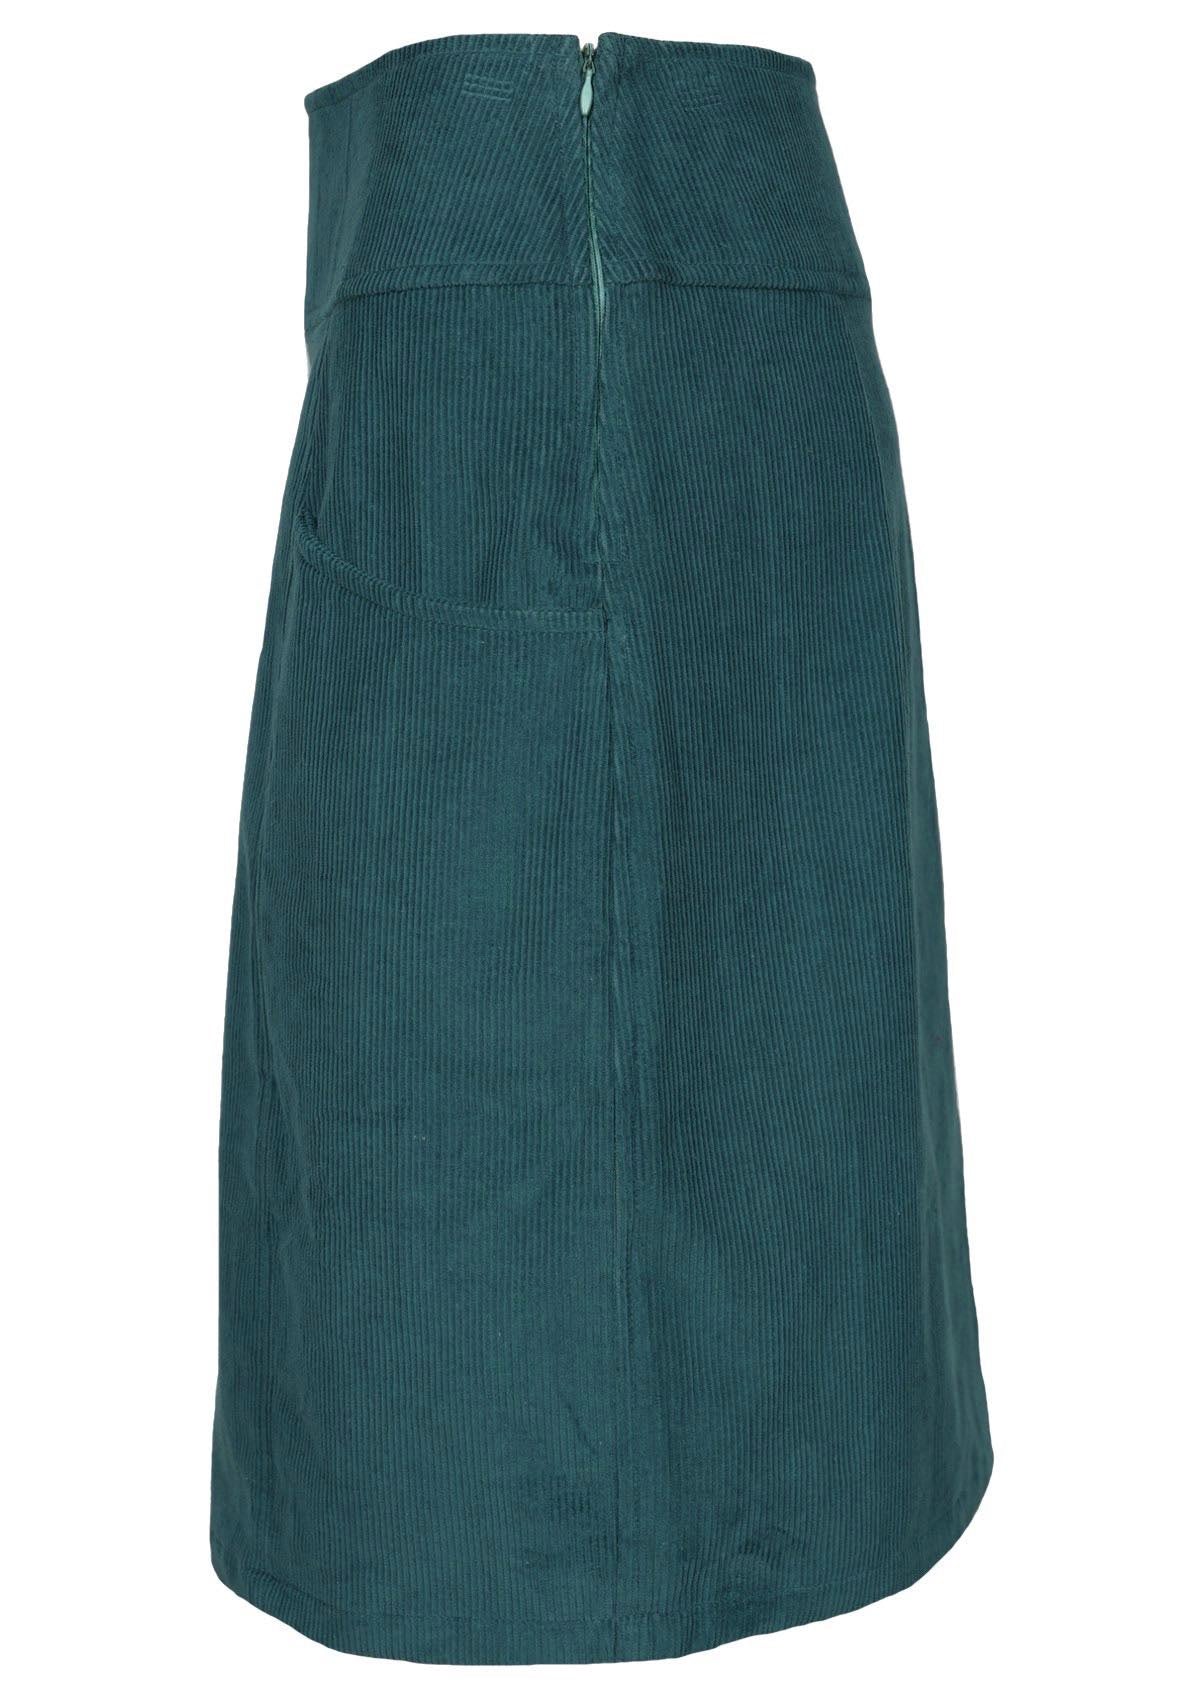 Mid length corduroy skirt in a deep teal colour has a hidden side zip. 